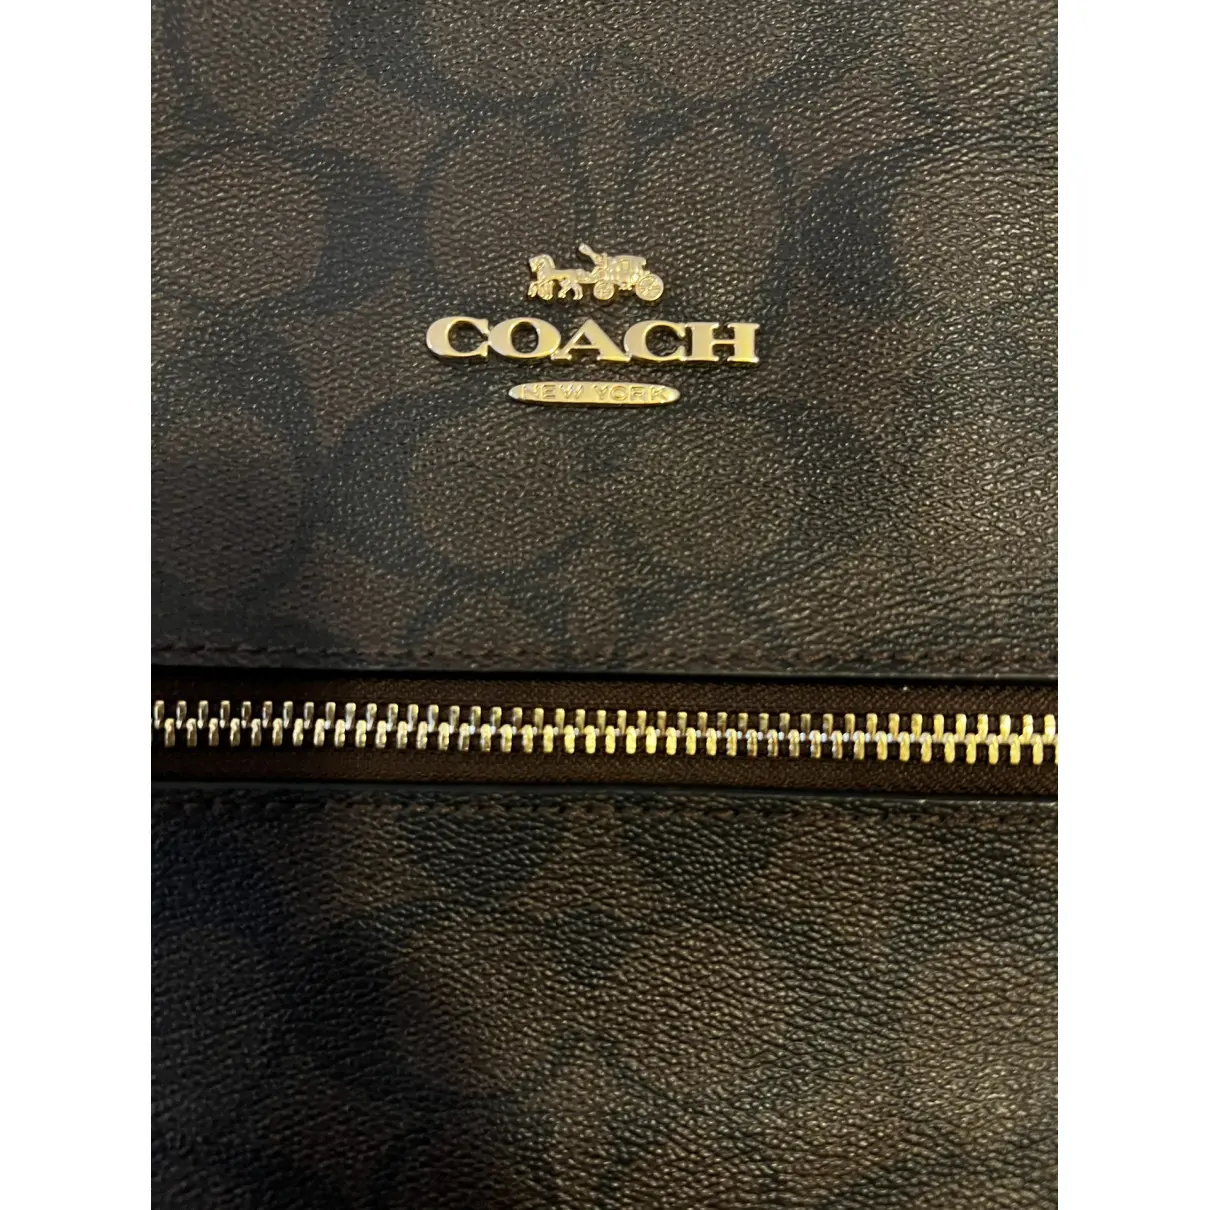 Buy Coach CITY ZIP TOTE leather handbag online